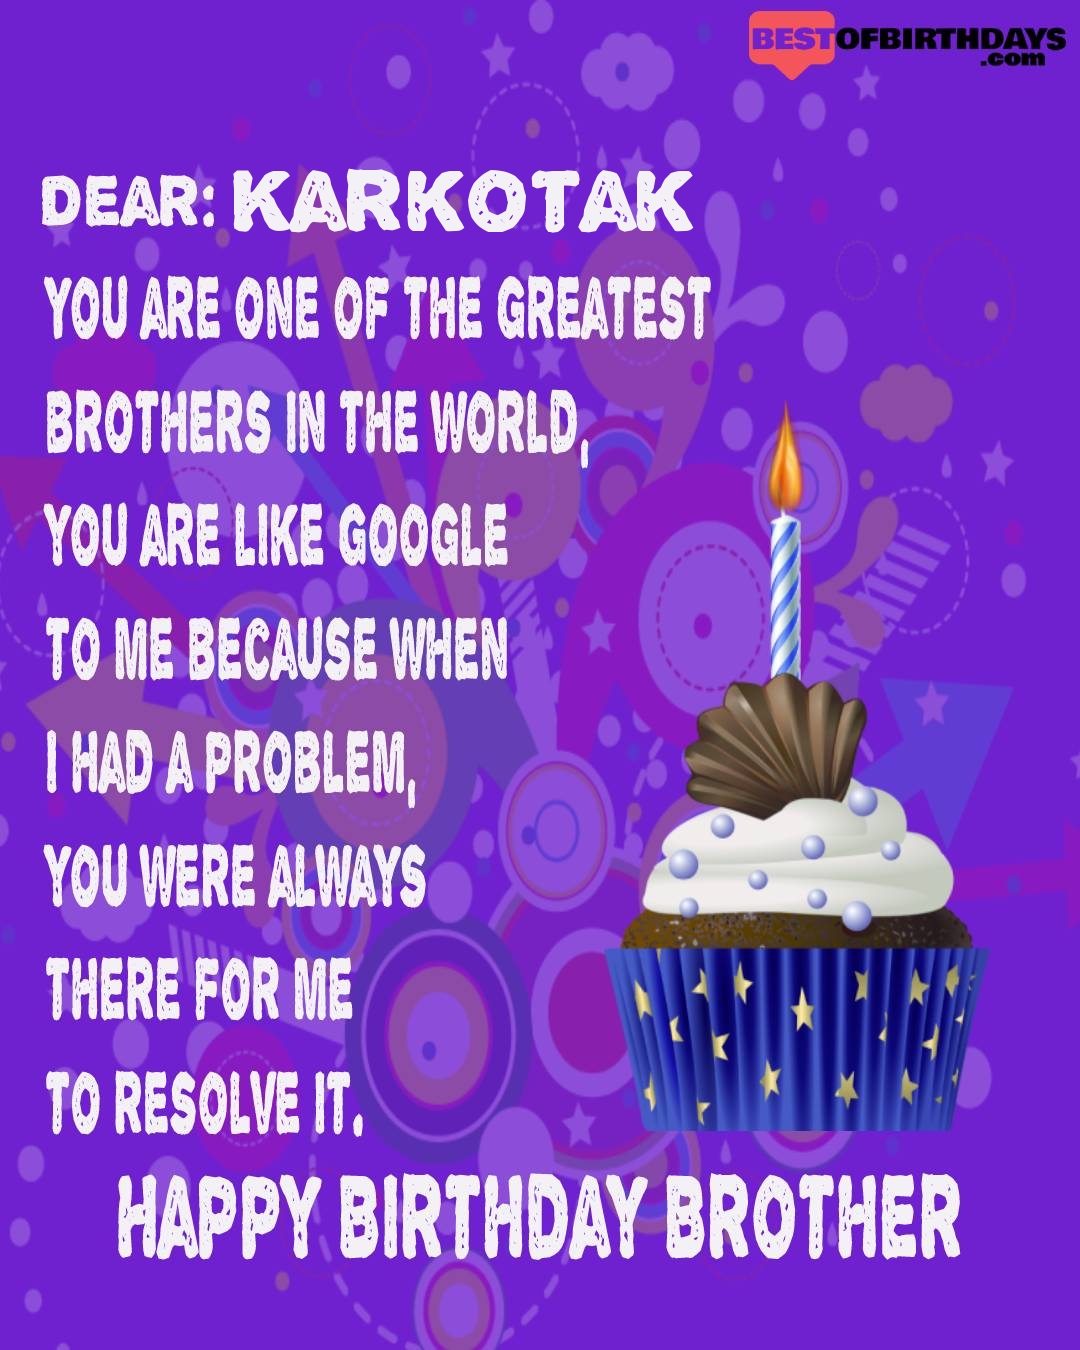 Happy birthday karkotak bhai brother bro